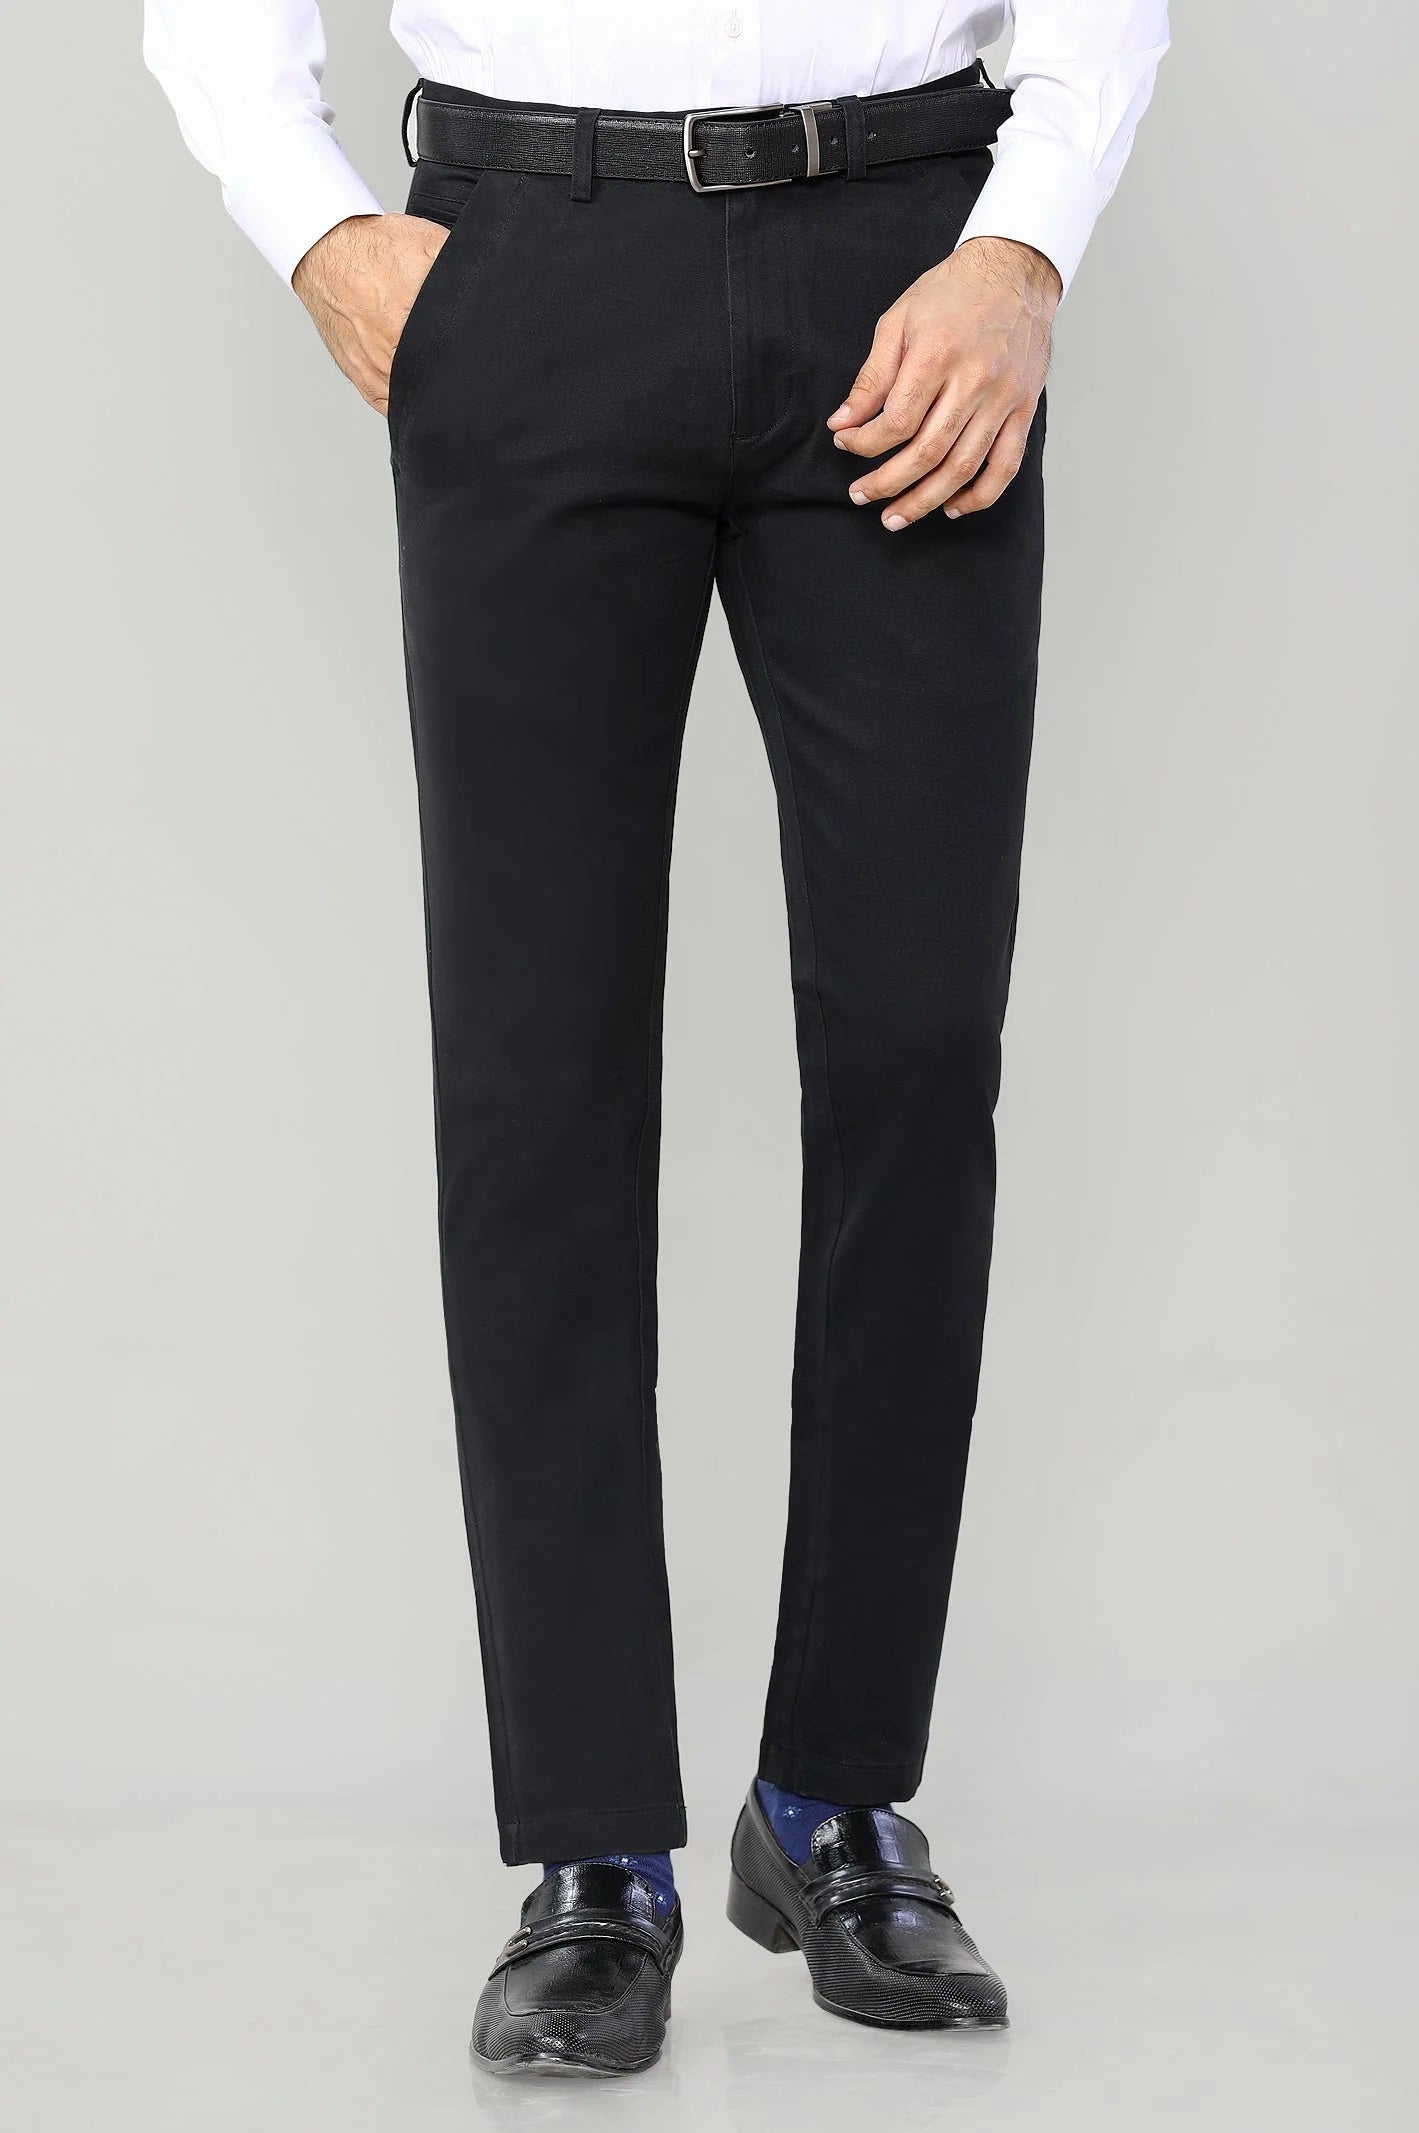 Men's Formal Executive Dress Trouser Pant || Black 3015 – Fabricessence.com